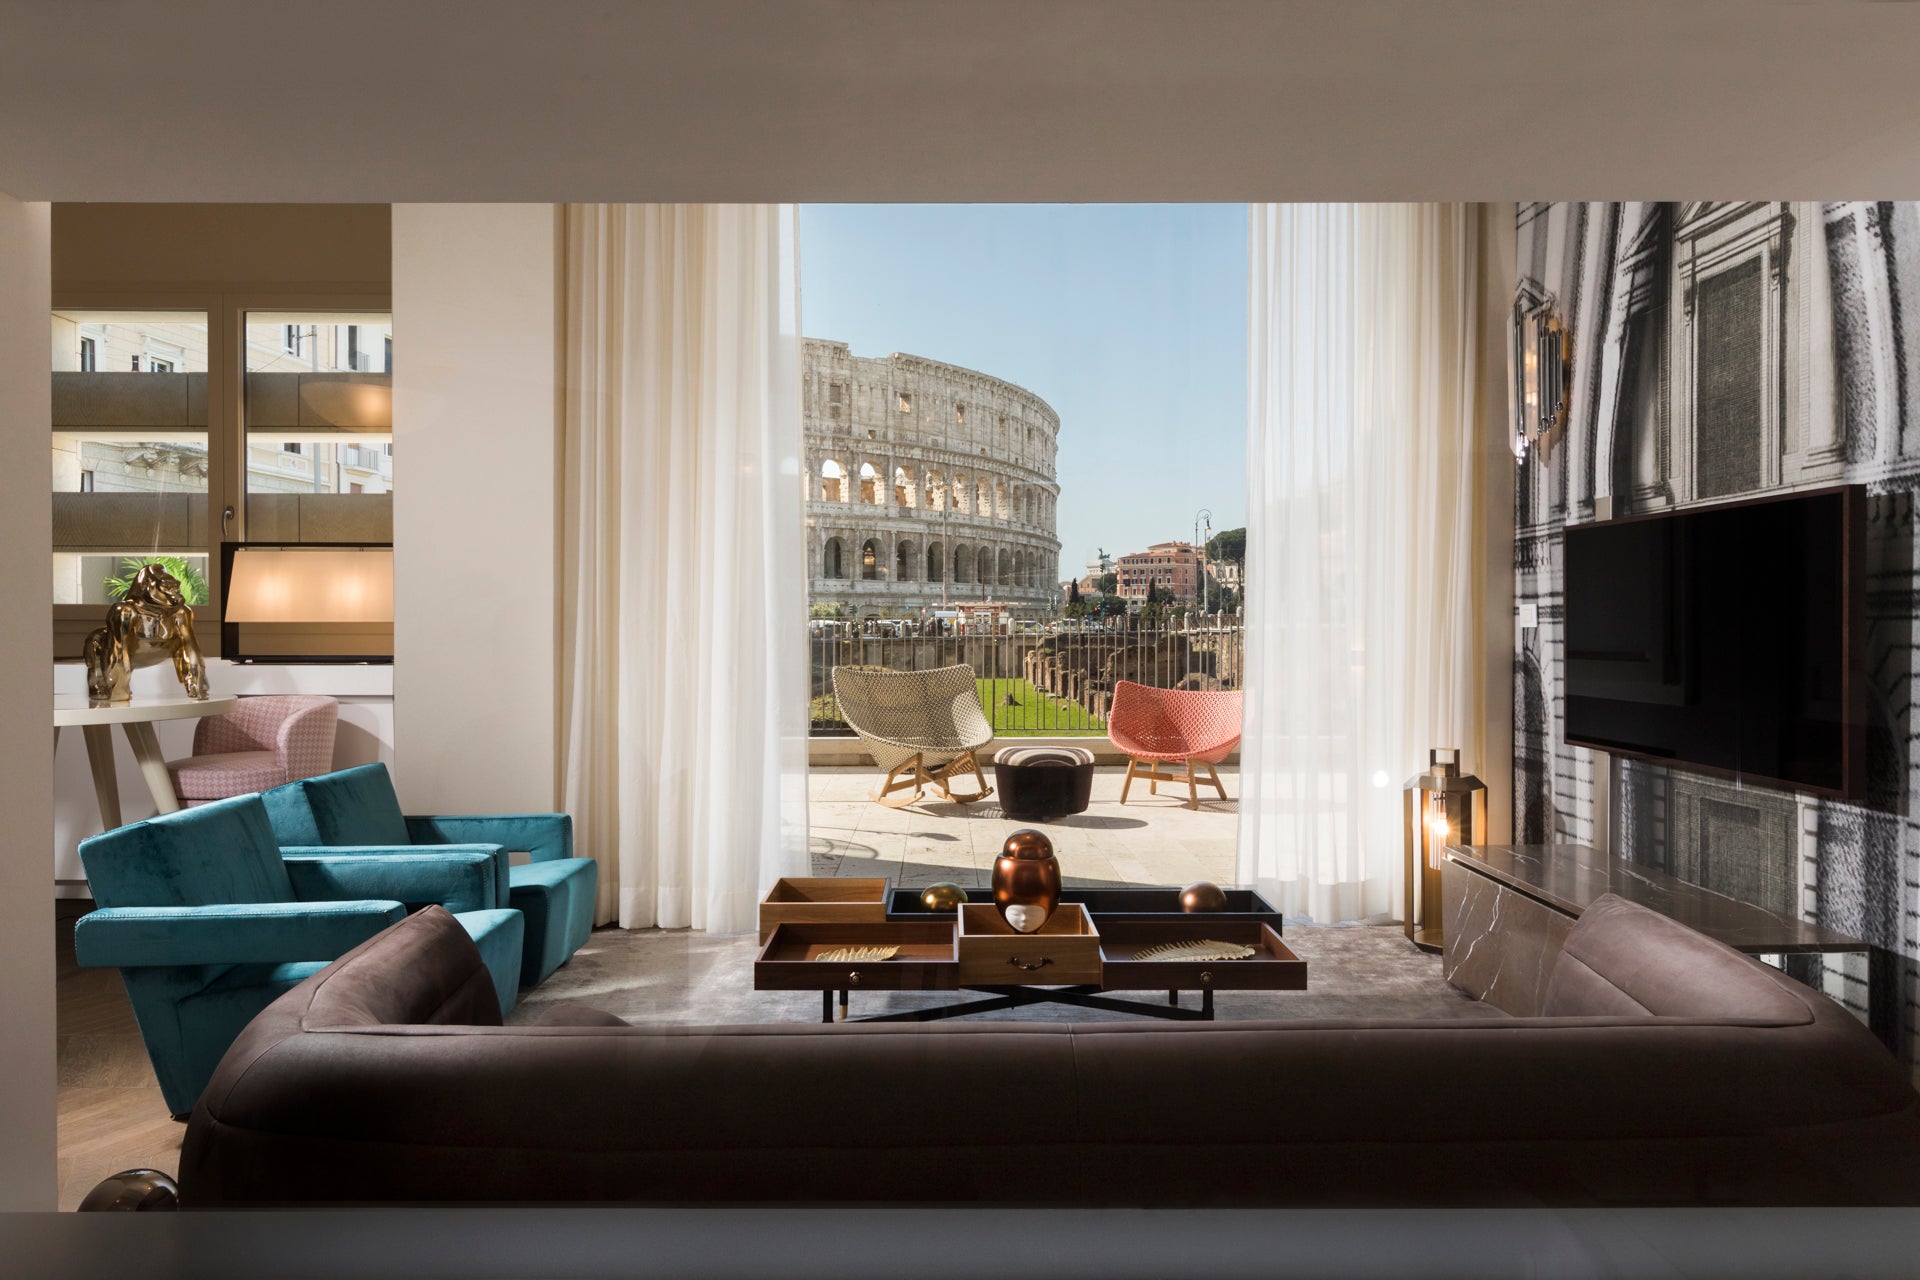 Palazzo Manfredi’s Grand View Colosseum Suite has incredible views